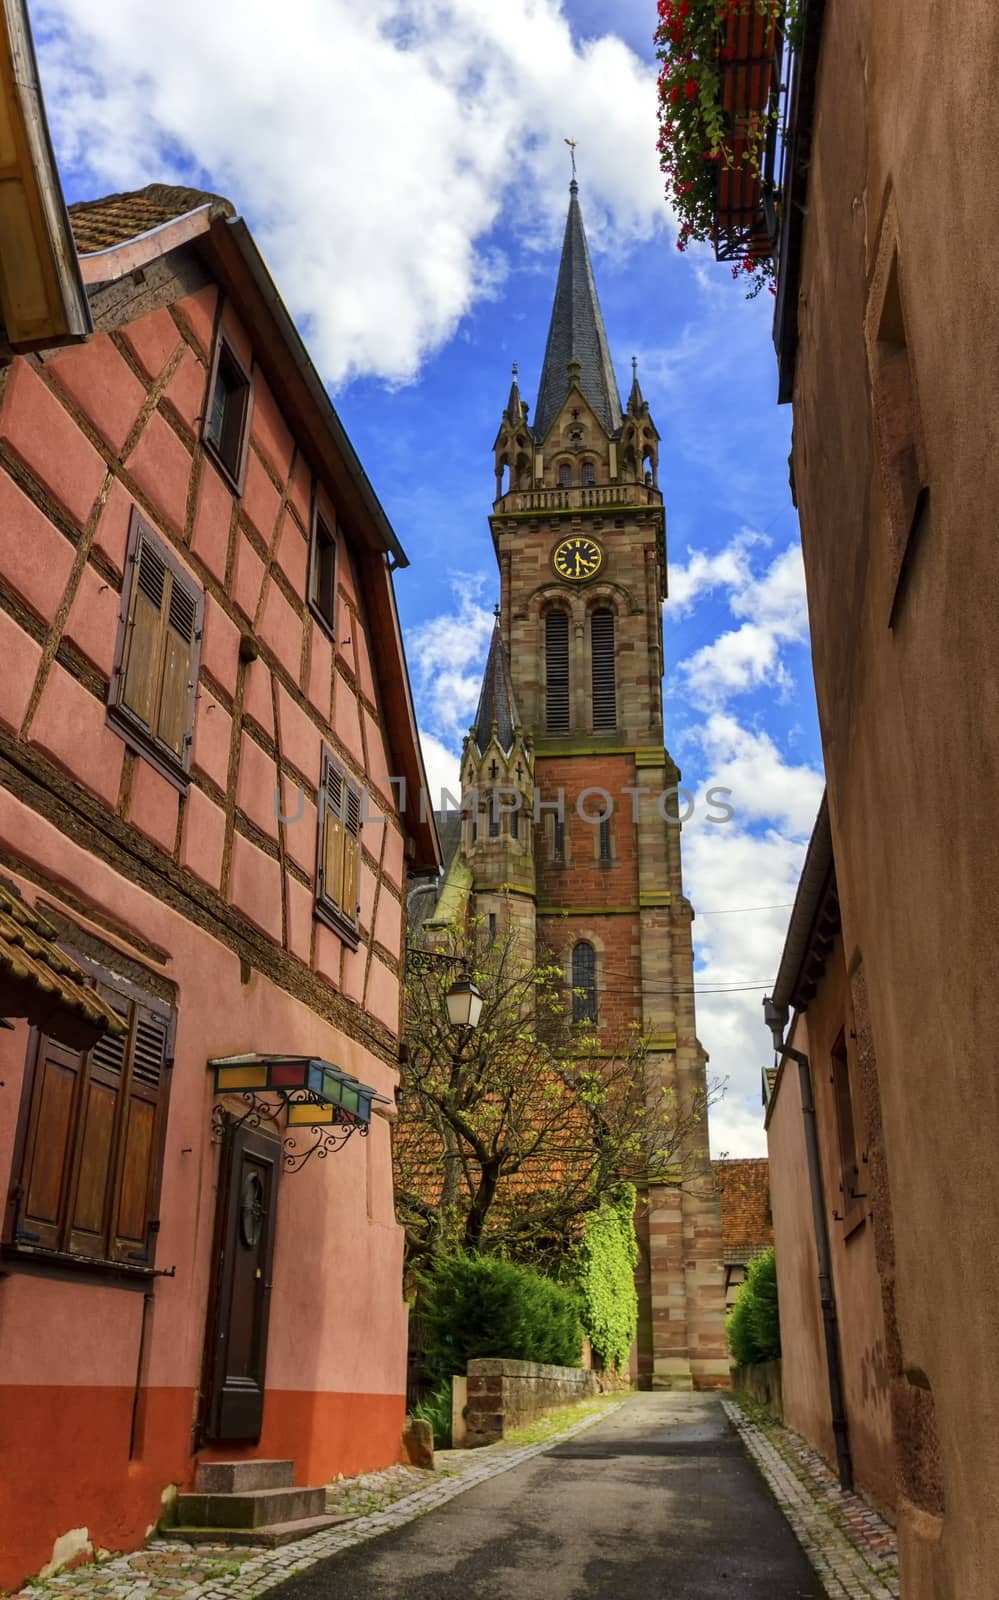 Church Saint-Etienne in Dambach-la-ville, Alsace, France by Elenaphotos21